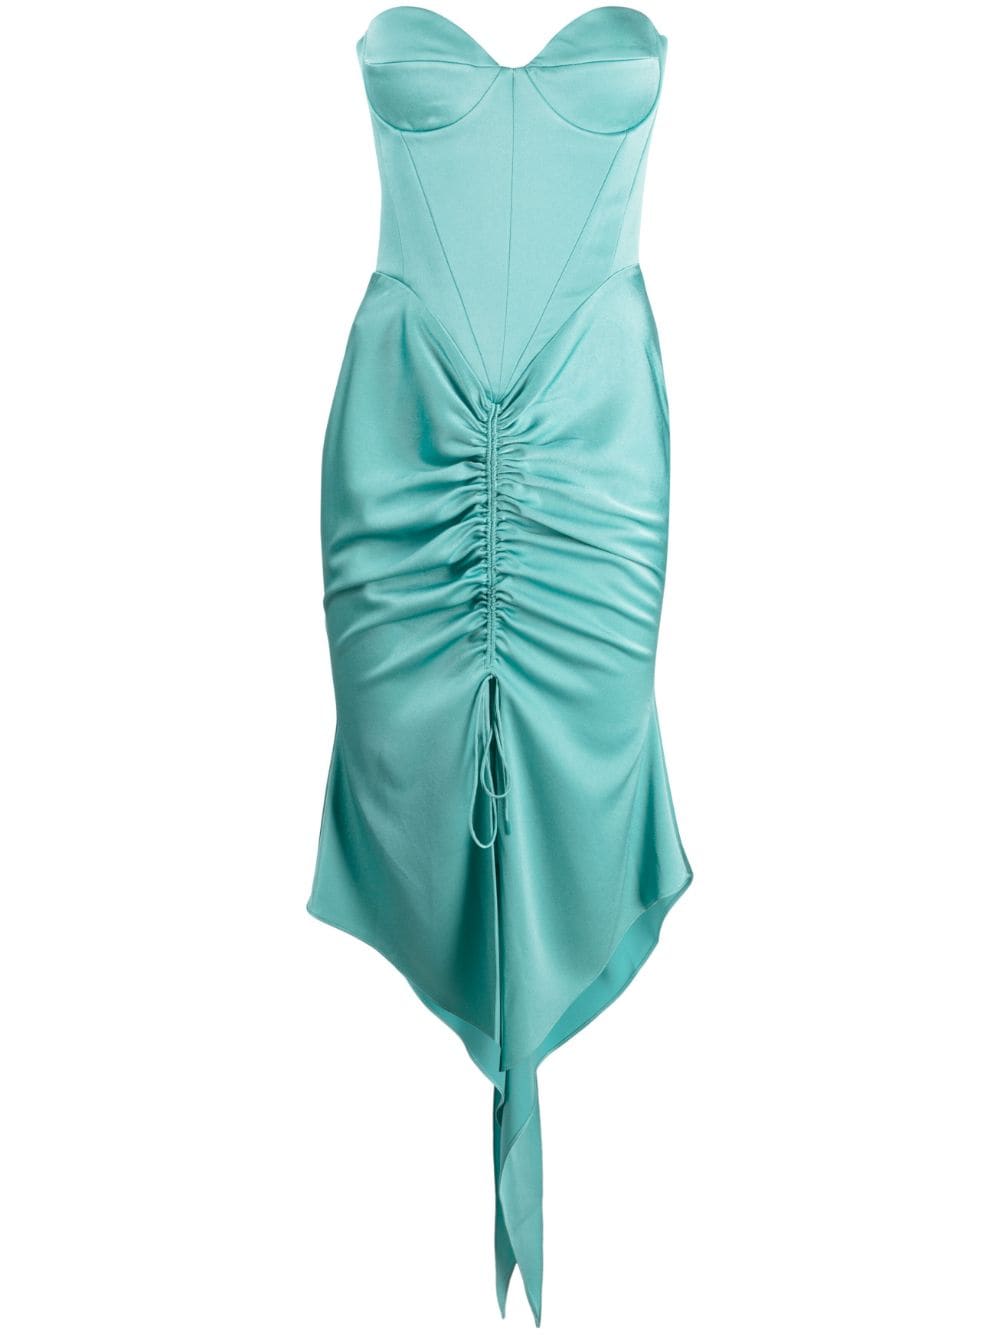 Alex Perry Carter asymmetric satin corset dress - Green von Alex Perry